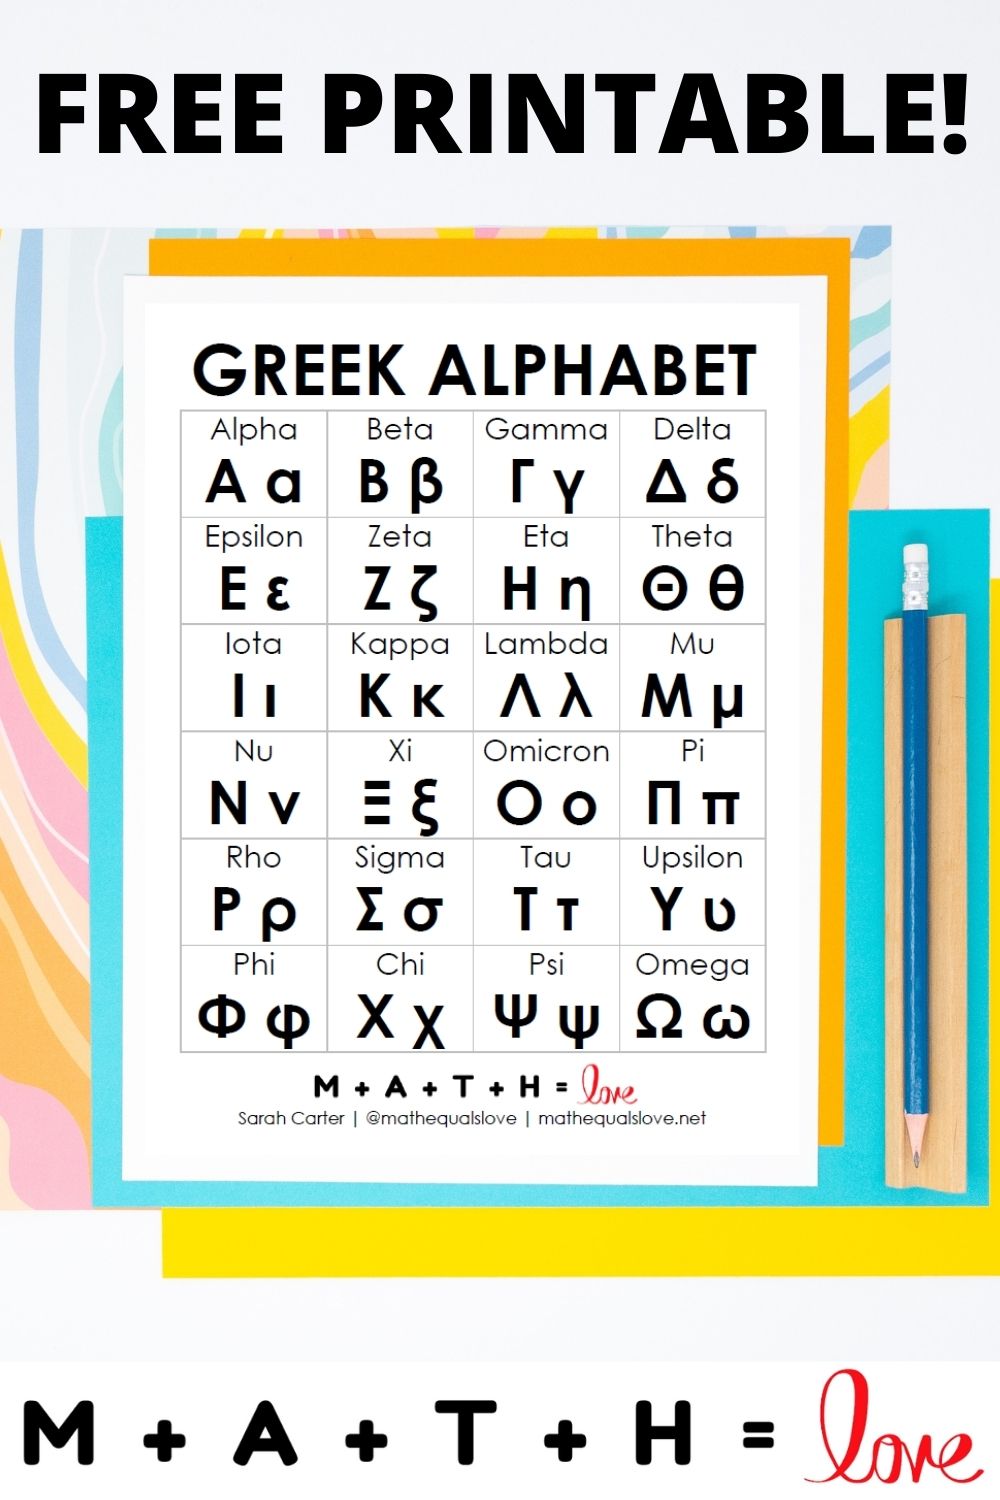 Printable Greek Alphabet.